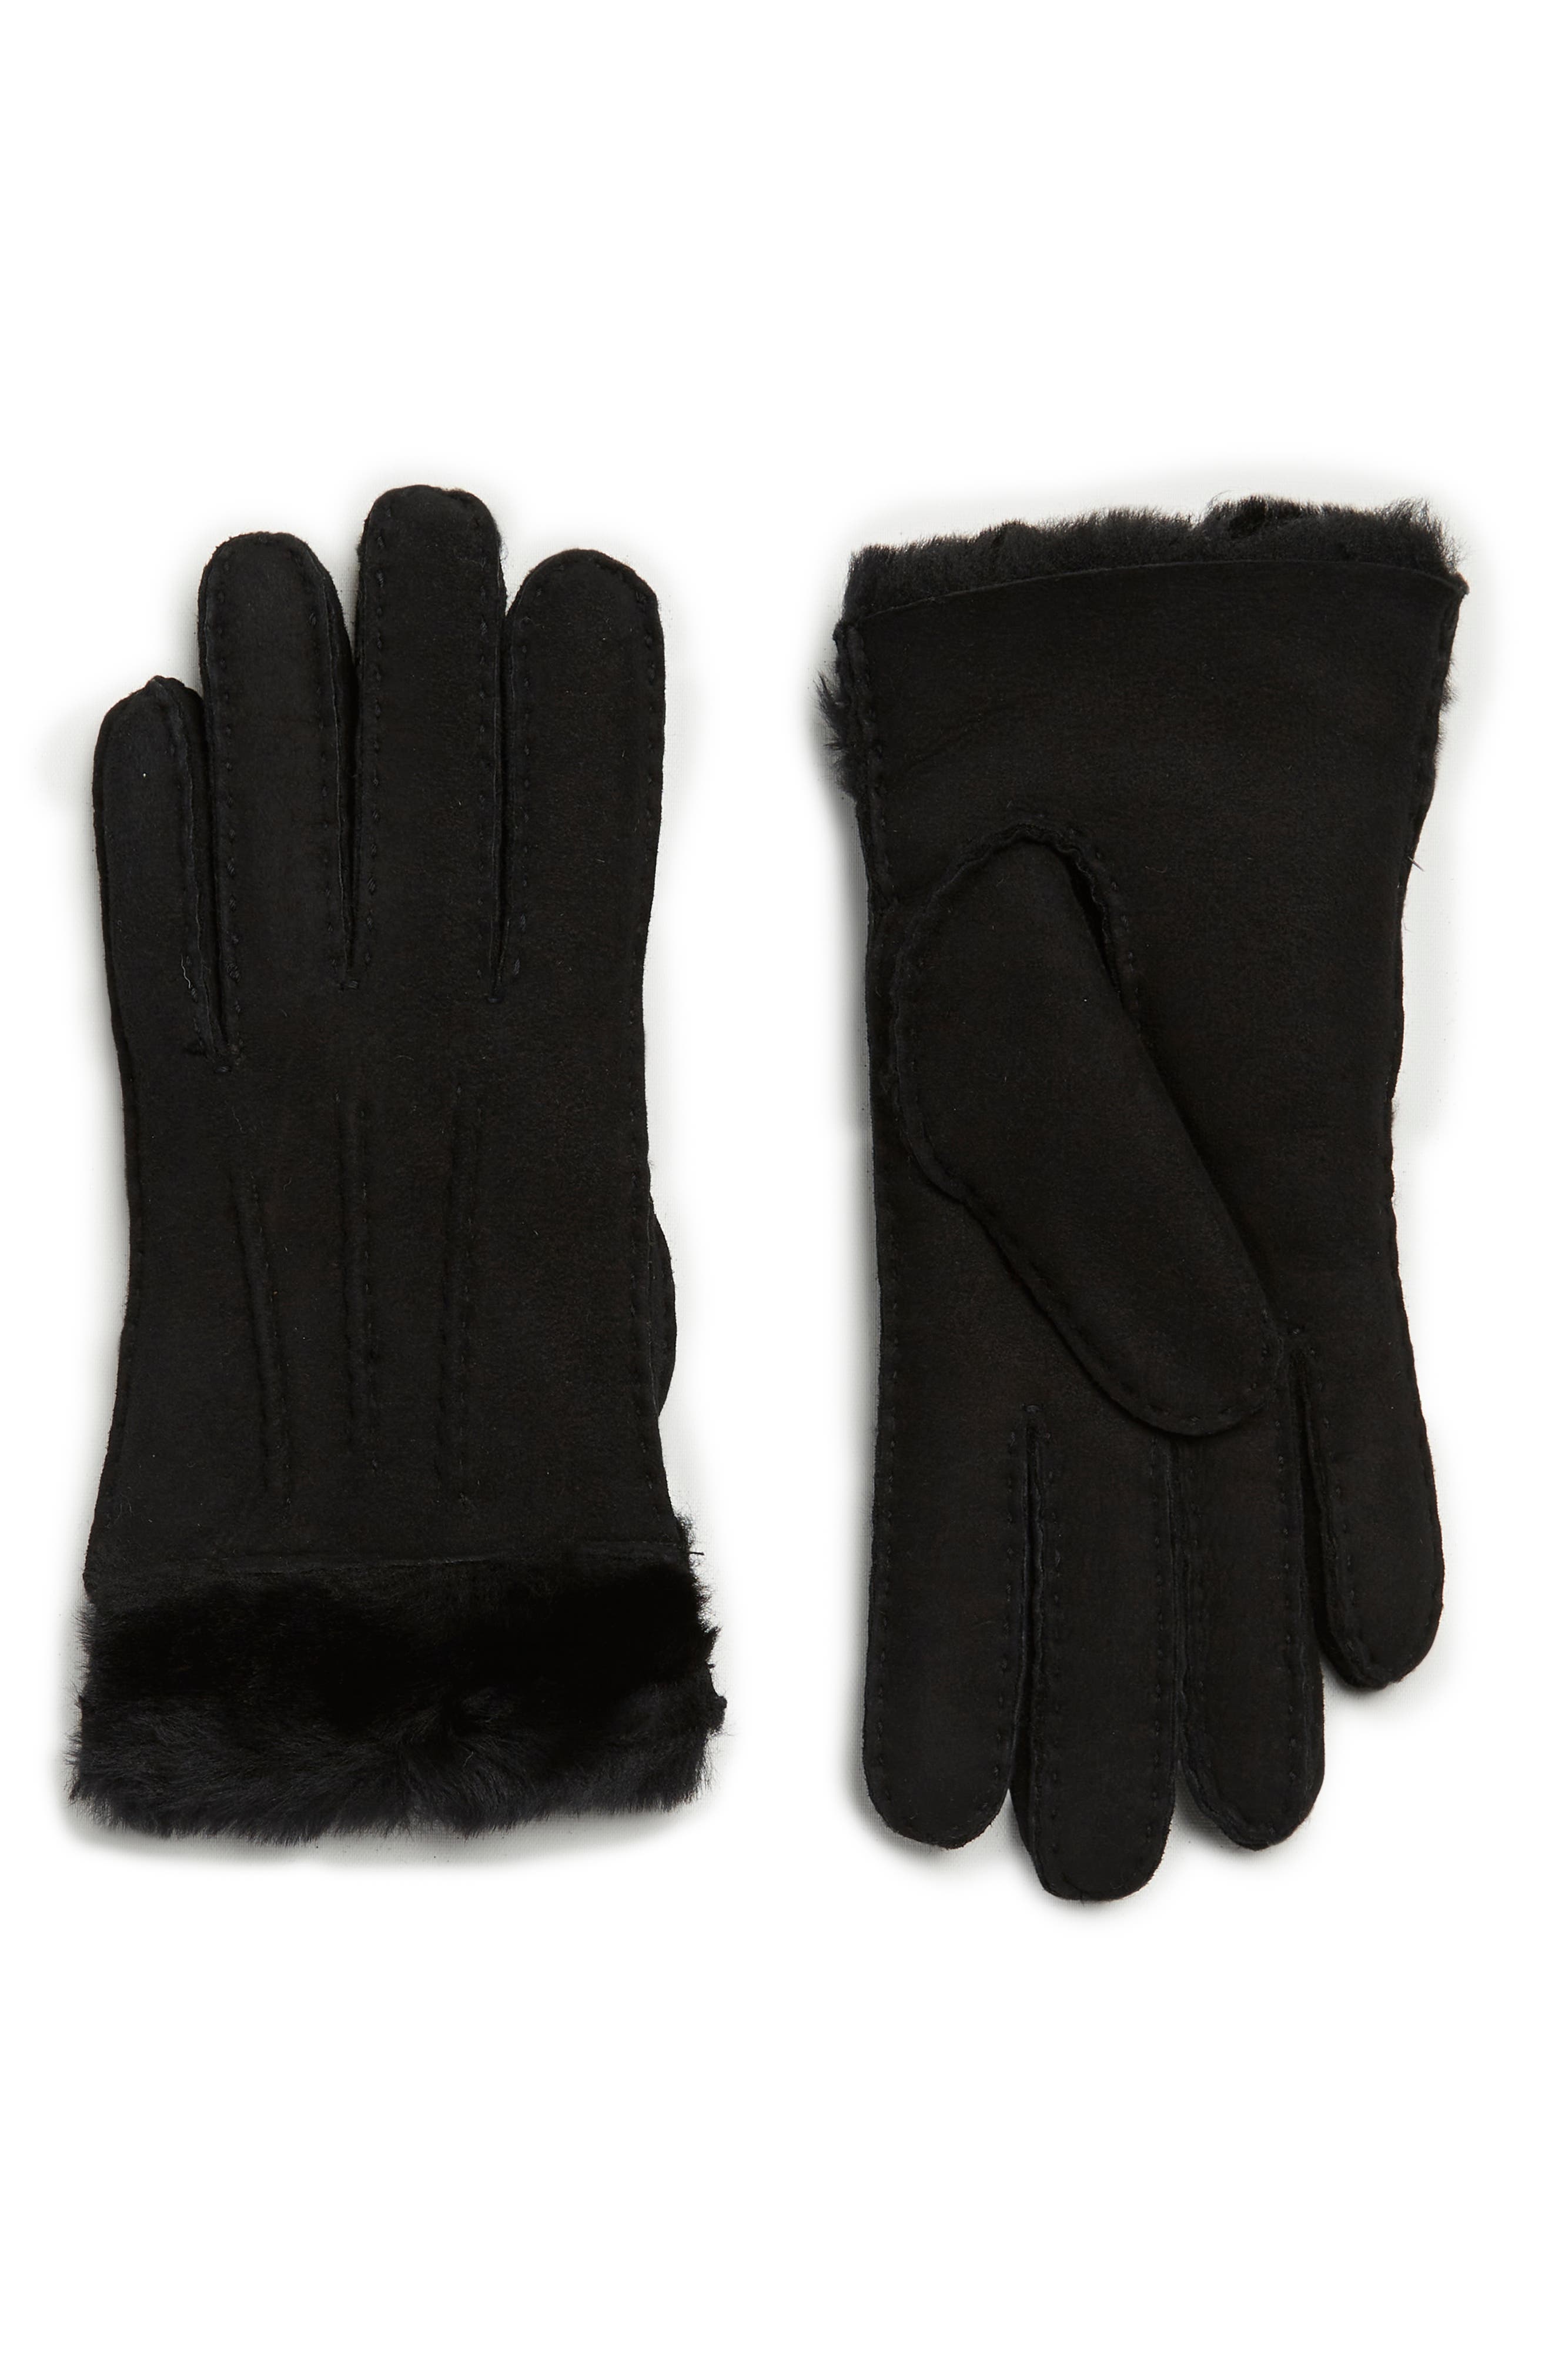 Orange Single Privata gloves WOMEN FASHION Accessories Gloves discount 88% 